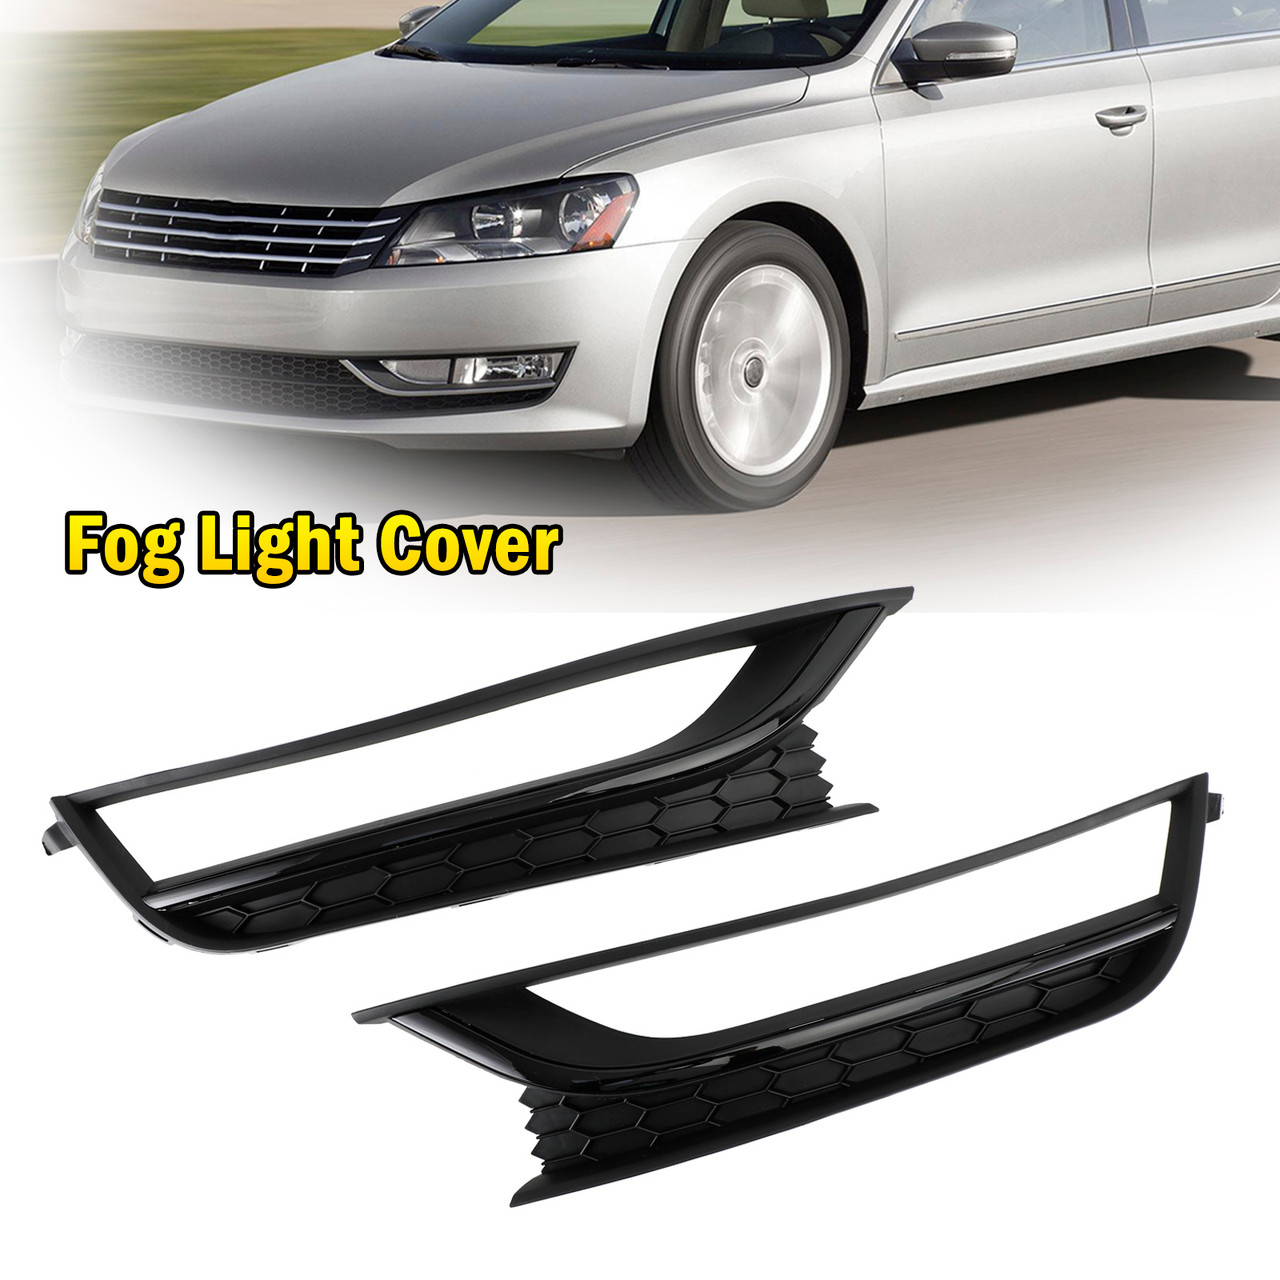  Chrome Front Bumper Lower Grille+Fog Light Cover Fit For  Compatible with VW Passat B7 2012 2013 2014 2015 USA Version : Automotive